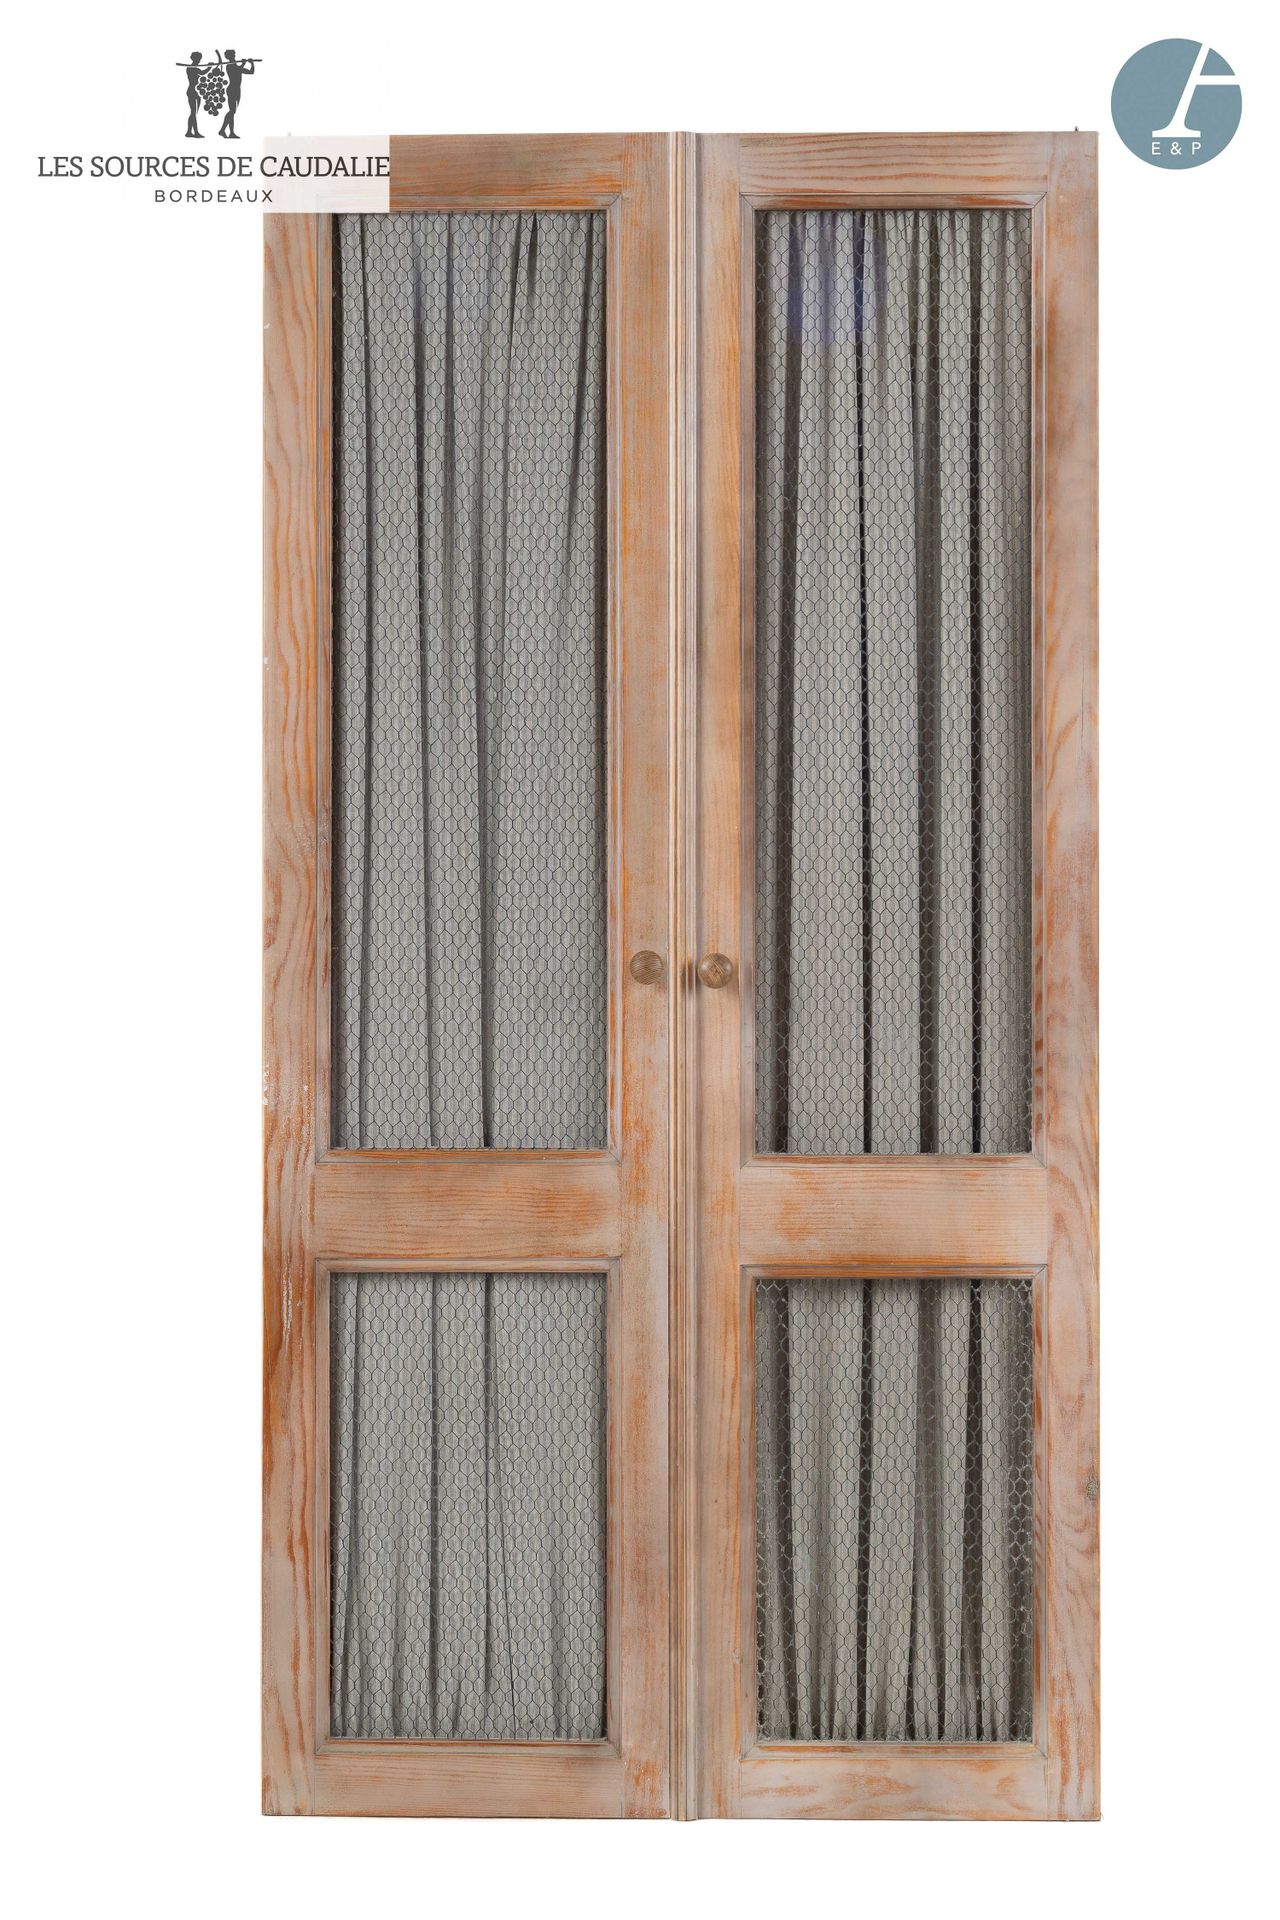 Null 源自Caudalie "Sol Y Vino"（Maison du Lièvre）的27号房间。
一对天然木质的衣柜门，灰色的条纹织物背景
高：188&hellip;